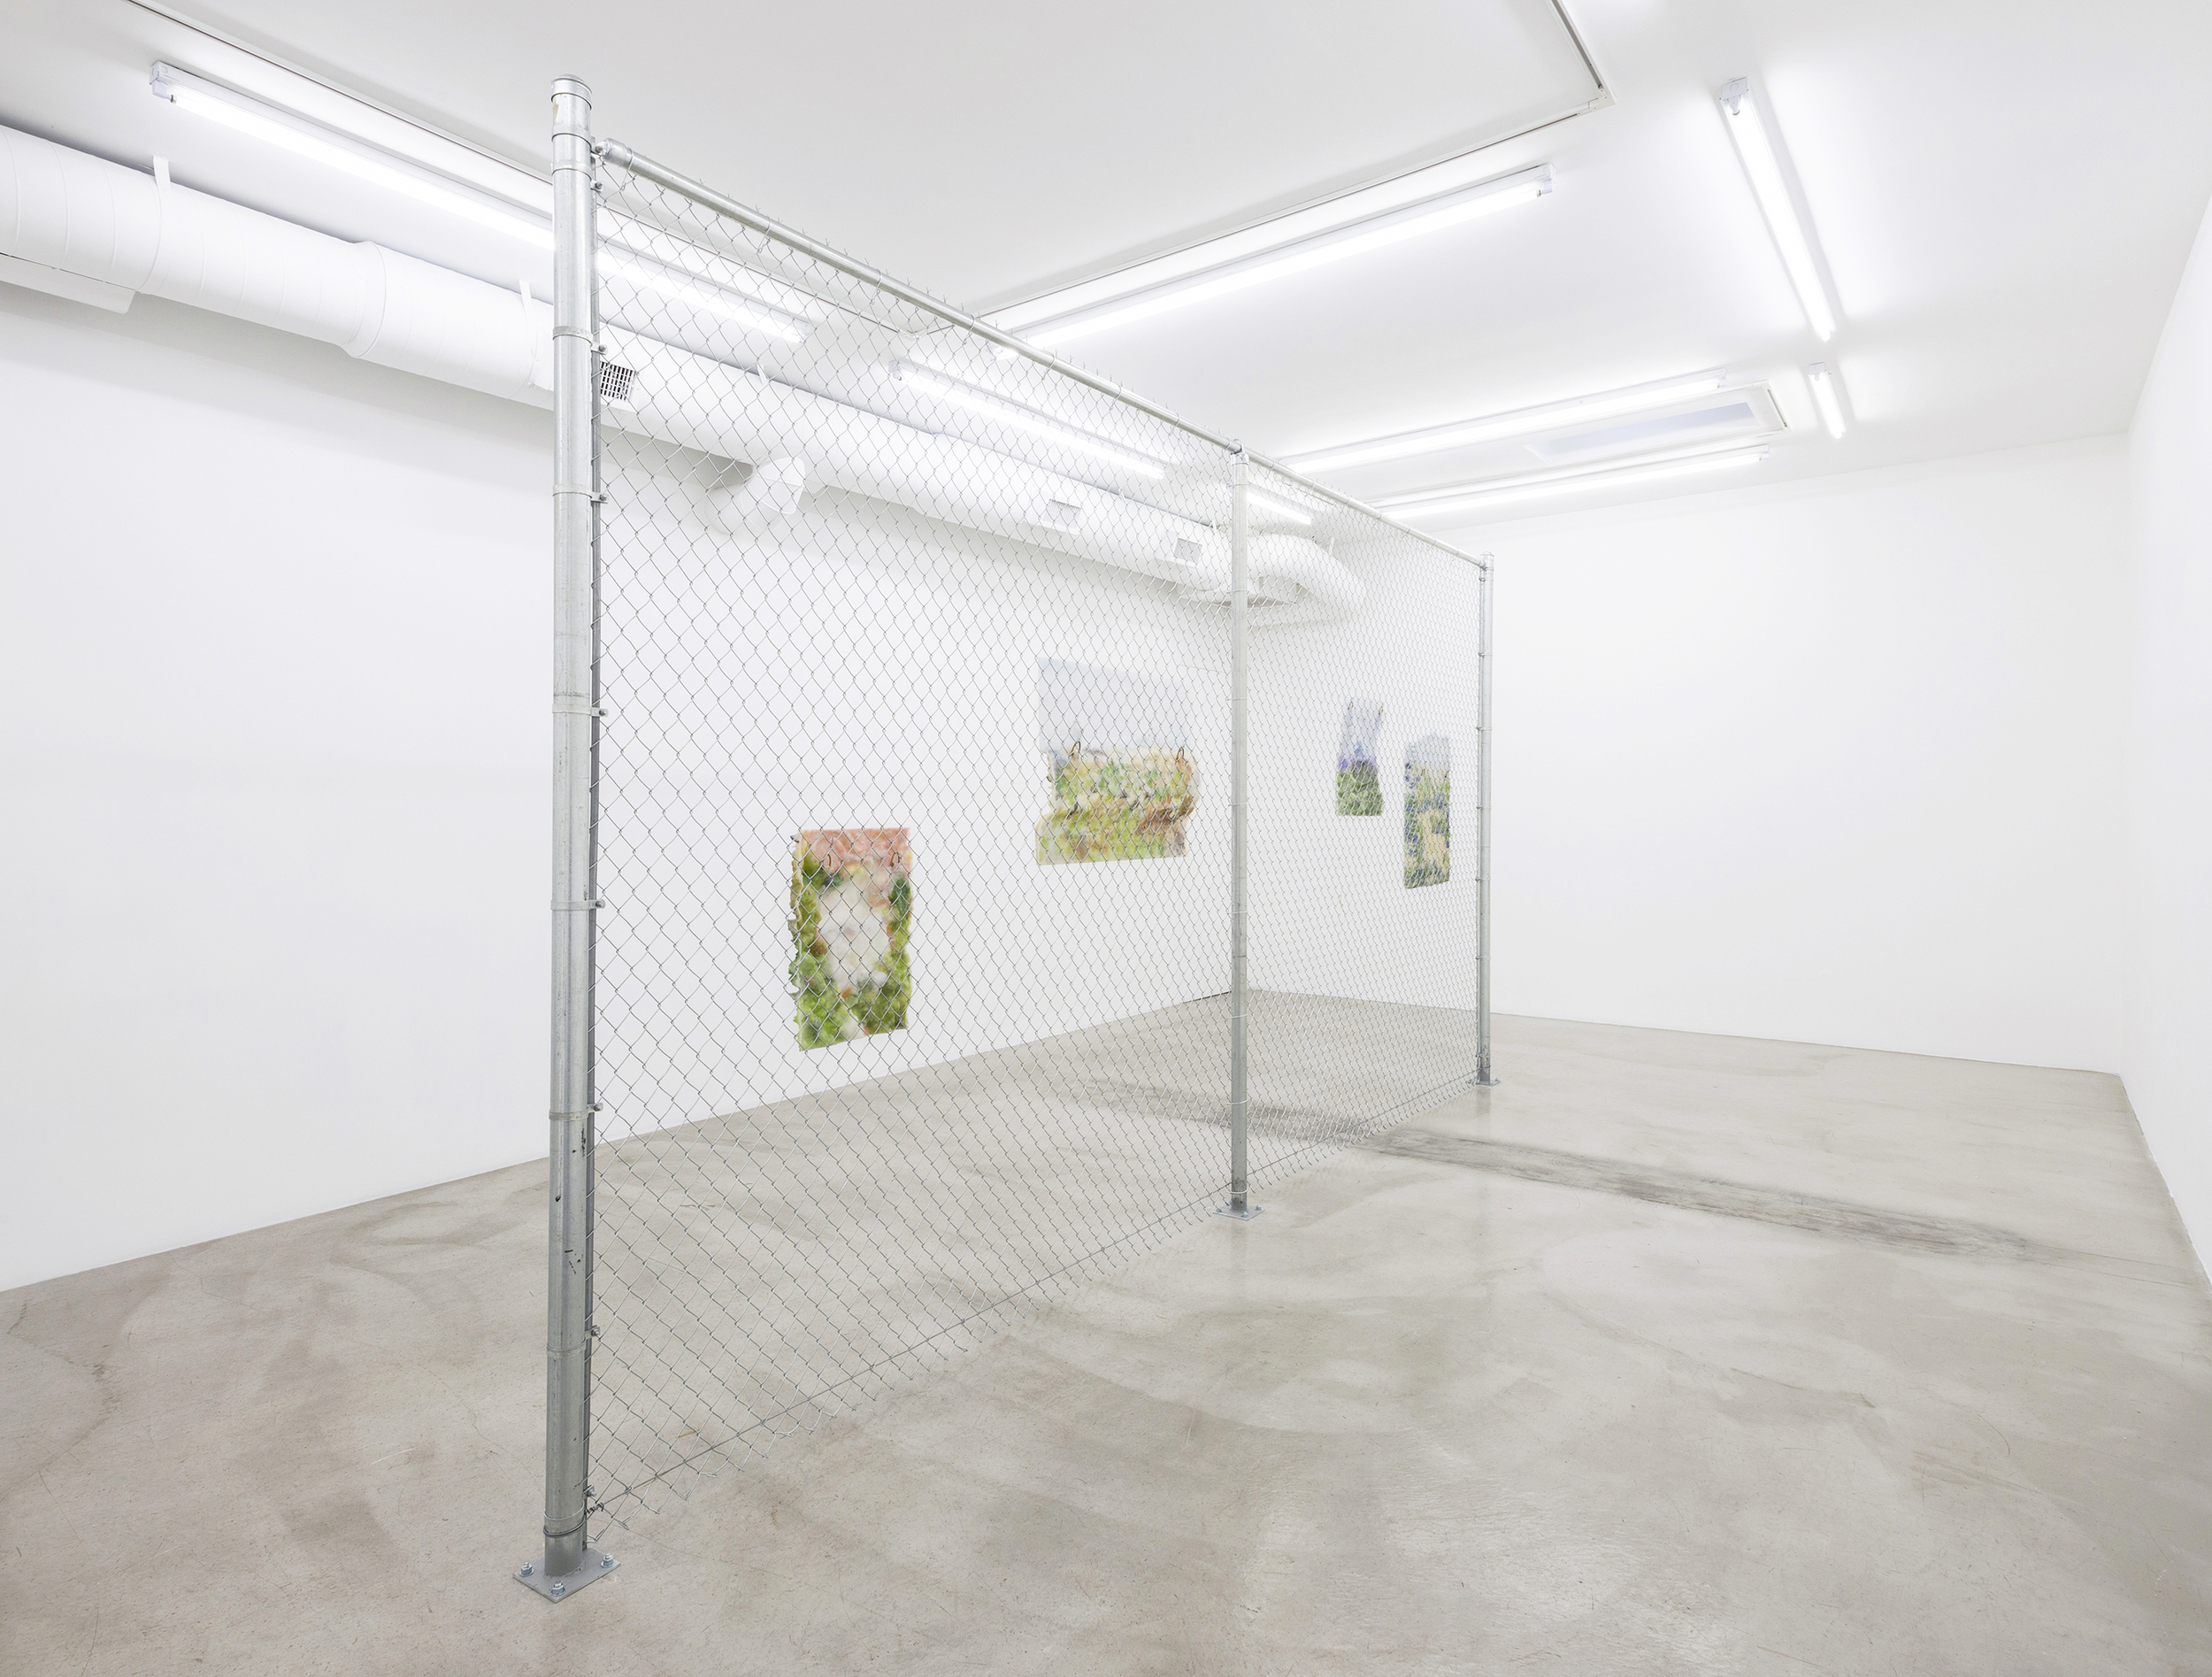  Dwyer Kilcollin THE VIEW Part II M+B Gallery LAXART installation Los Angeles 